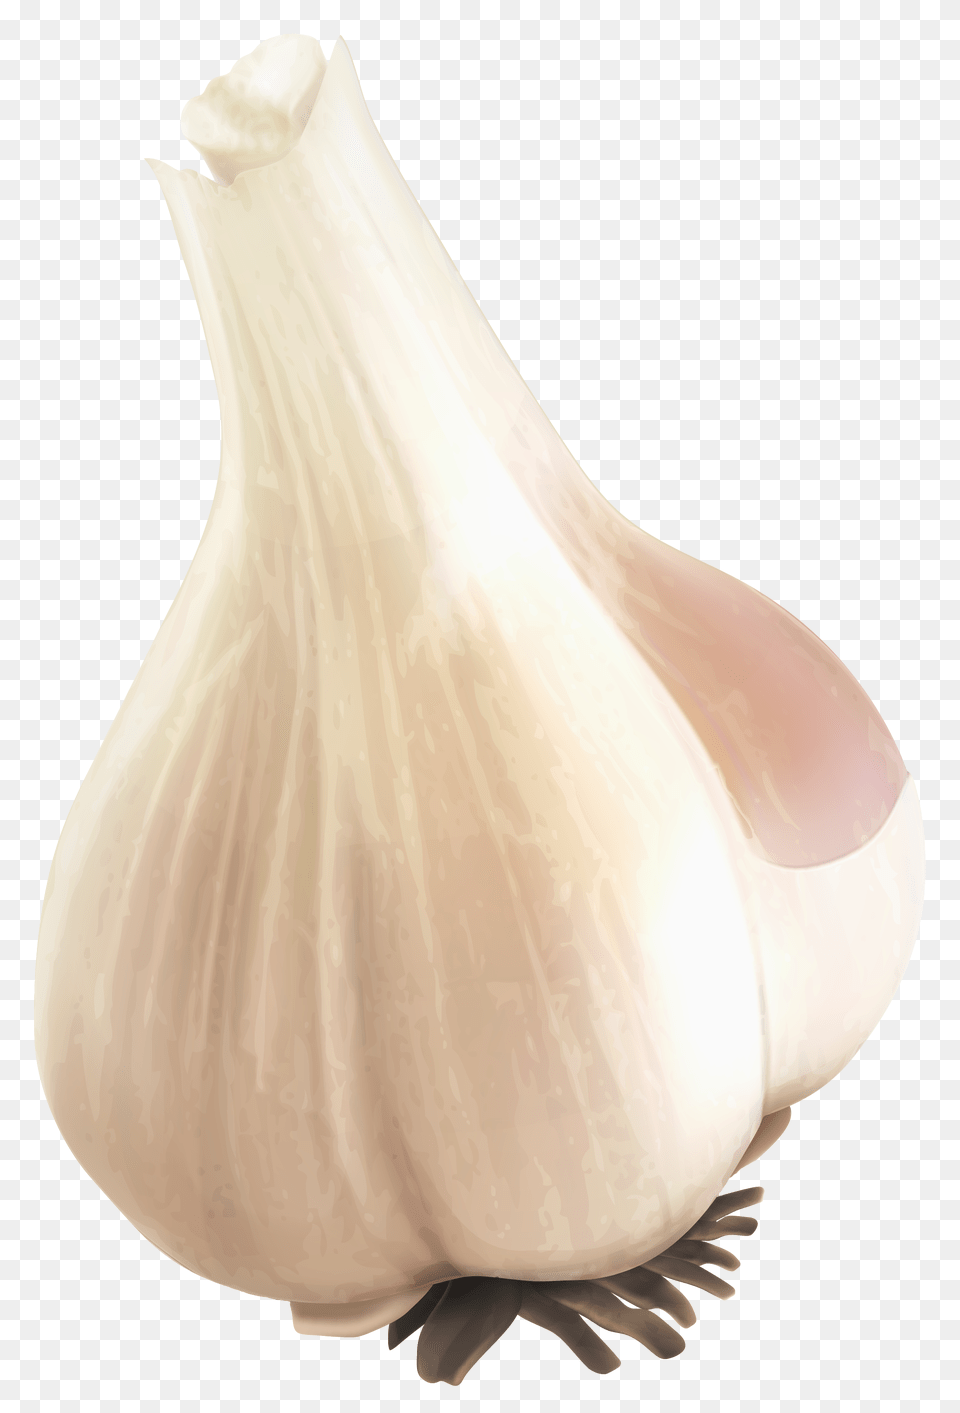 Garlic Image Garlic Desain, Produce, Food, Vegetable, Plant Png